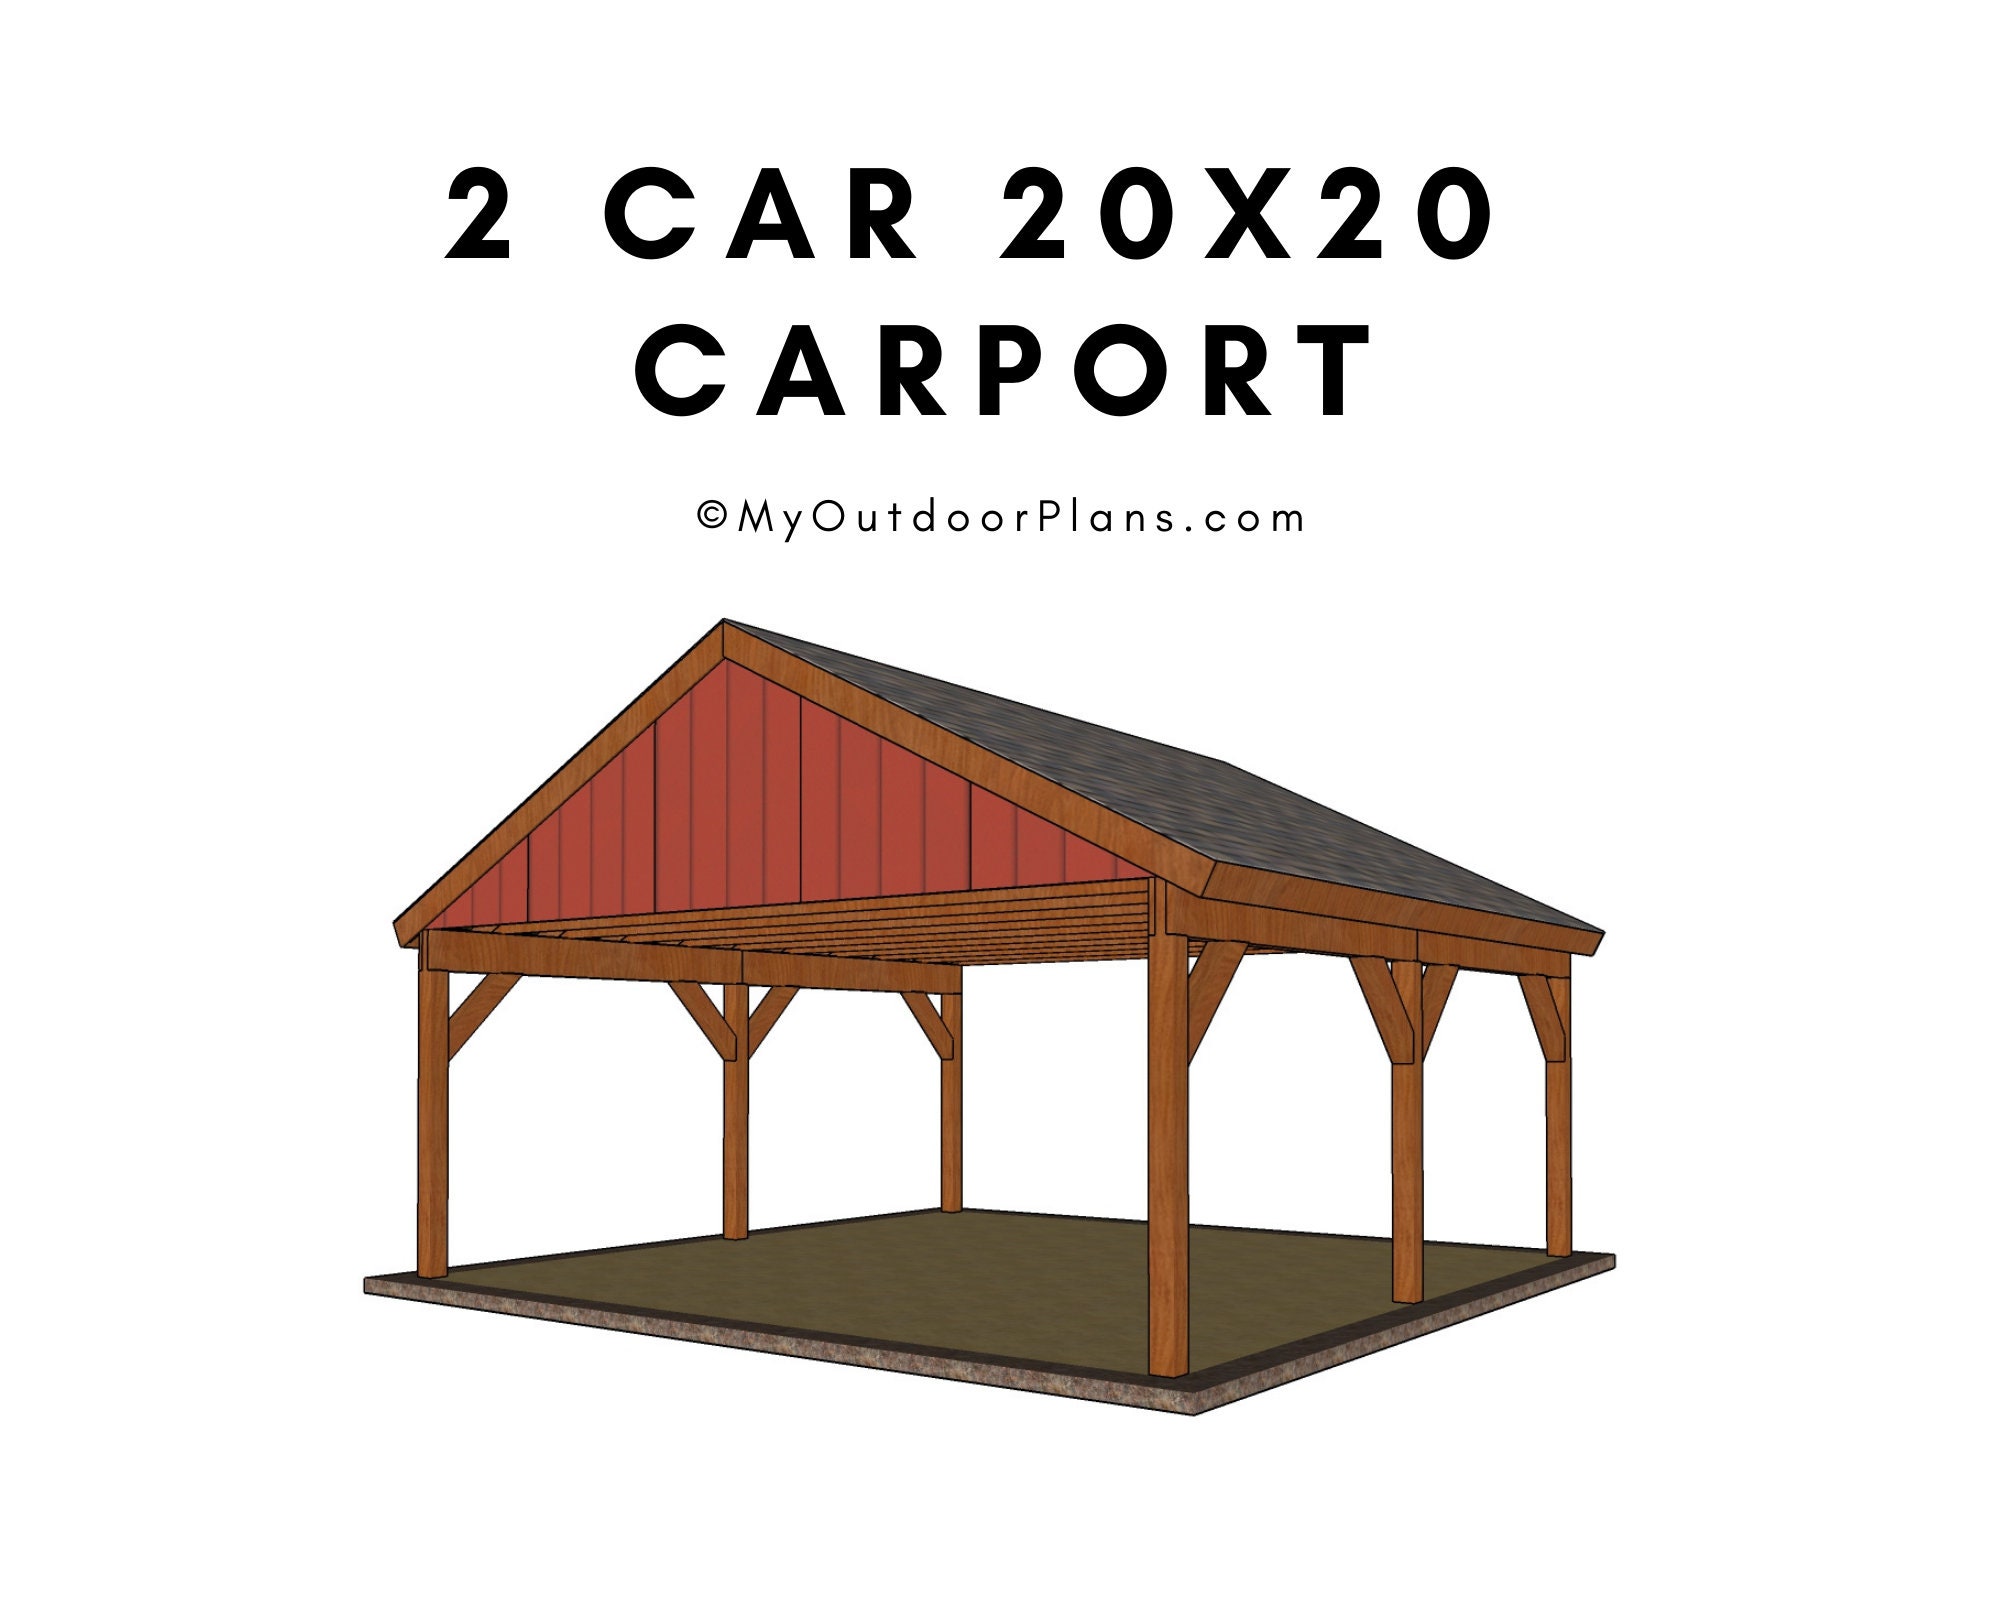 Carport wooden 20x20 US free shipping